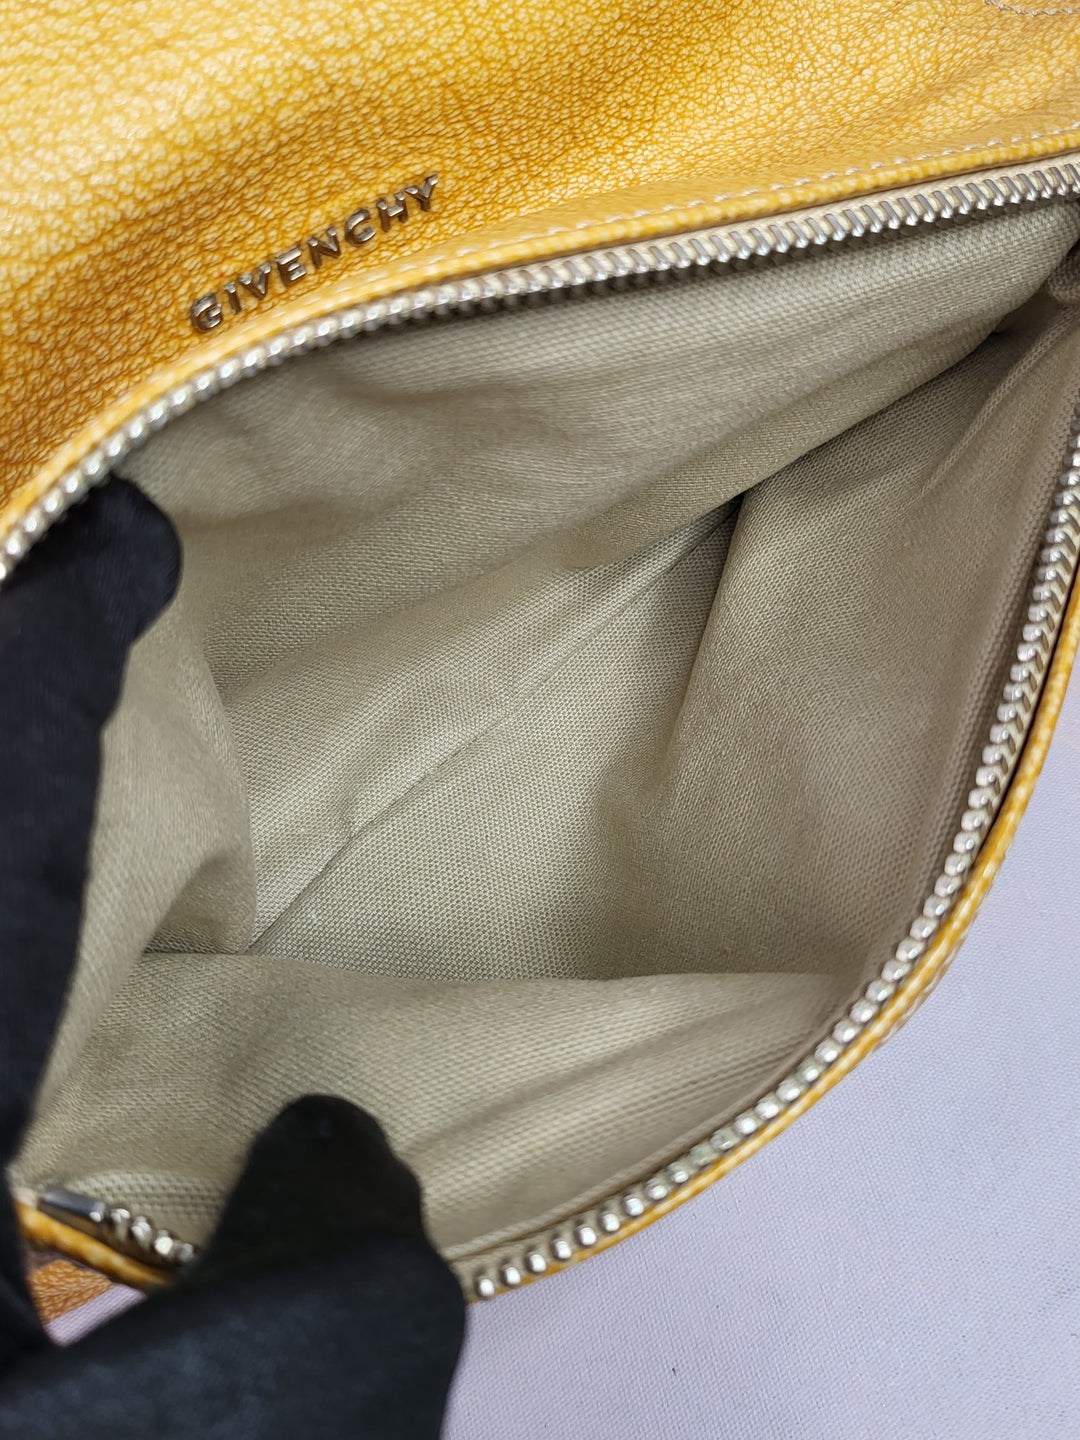 Givenchy Patent Pandora Bag